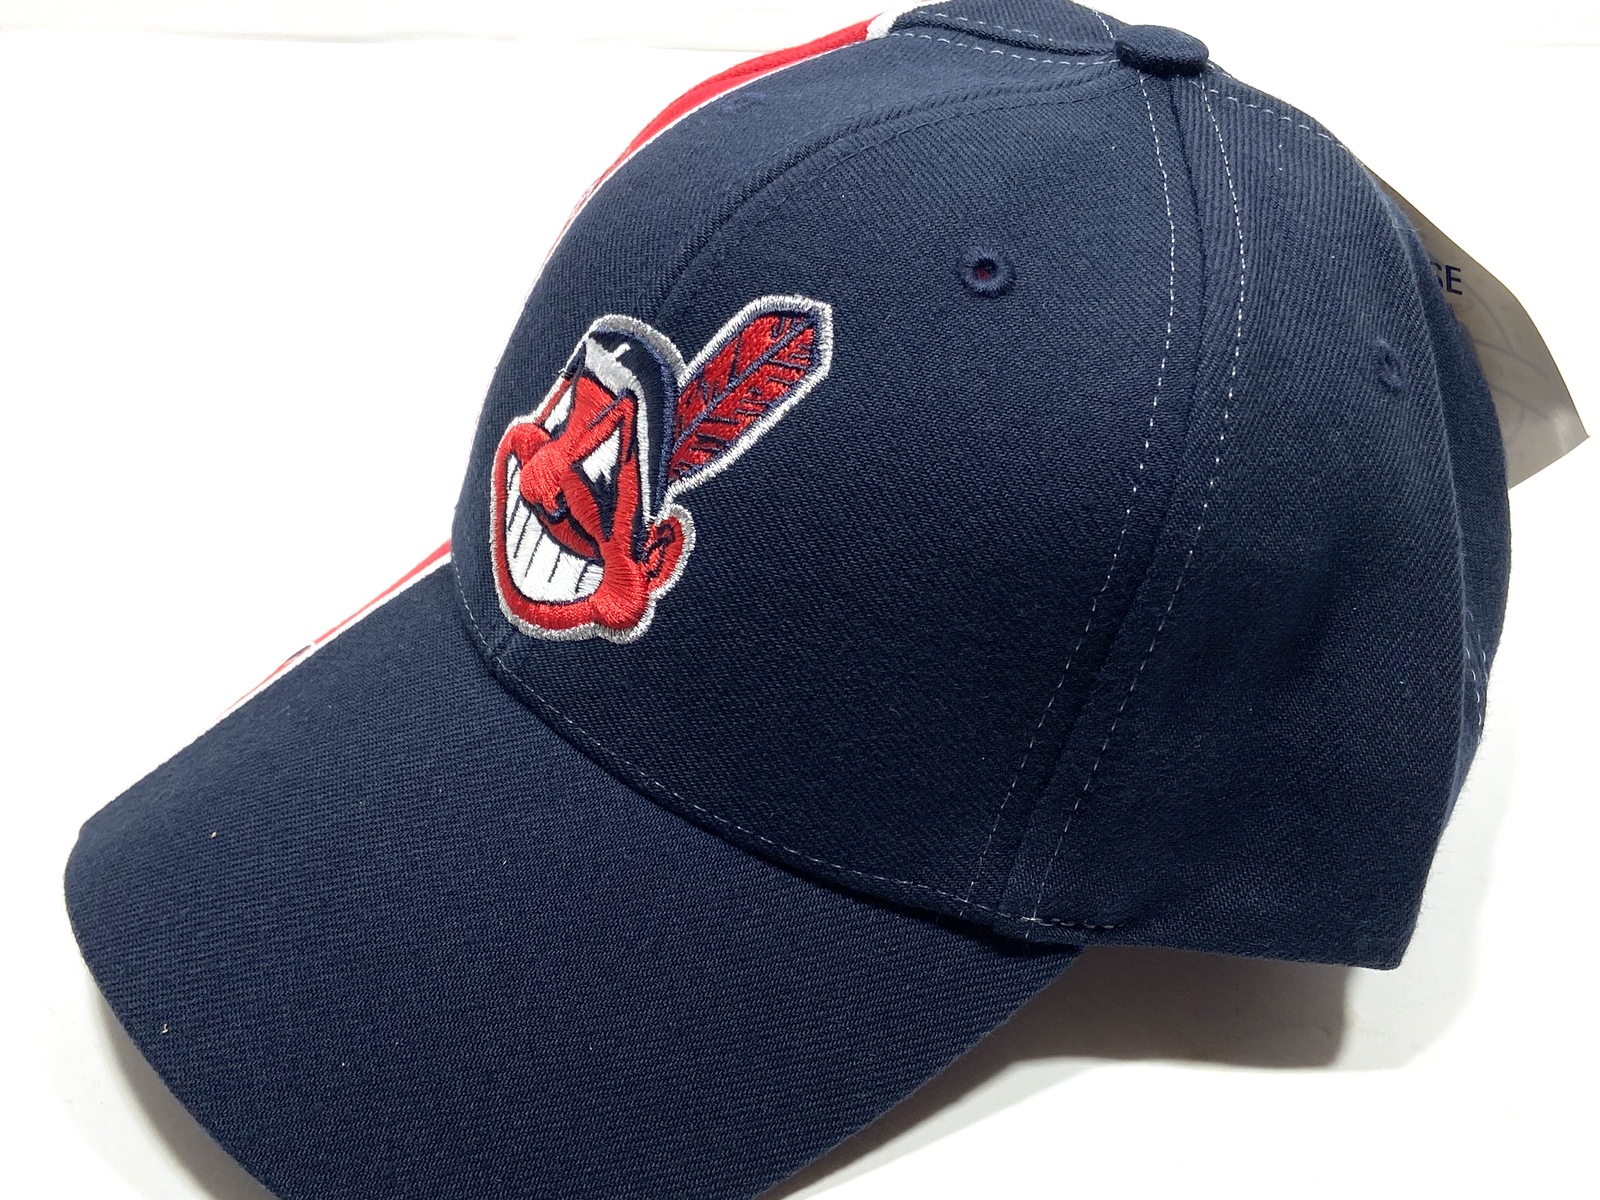 Cleveland Indians Baseball Helmet Vintageno head strap